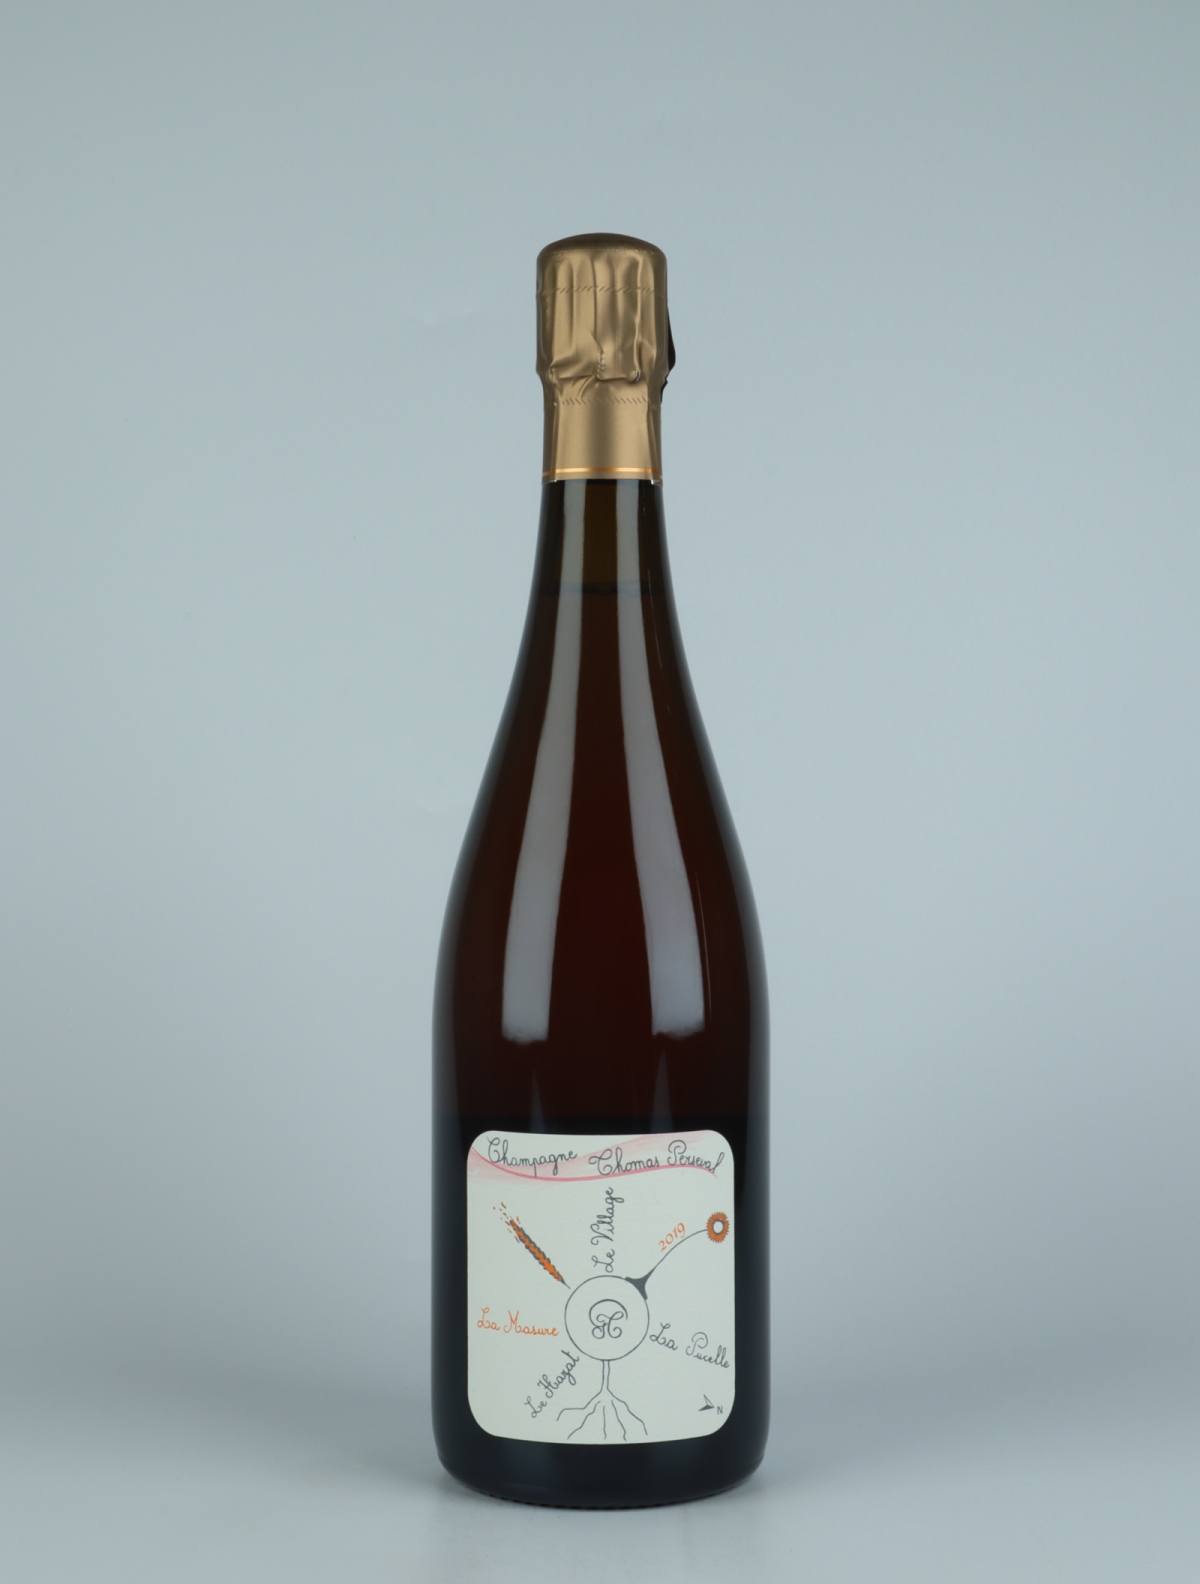 A bottle 2019 Chamery 1. Cru - La Masure - Rosé de macération Sparkling from Thomas Perseval, Champagne in France